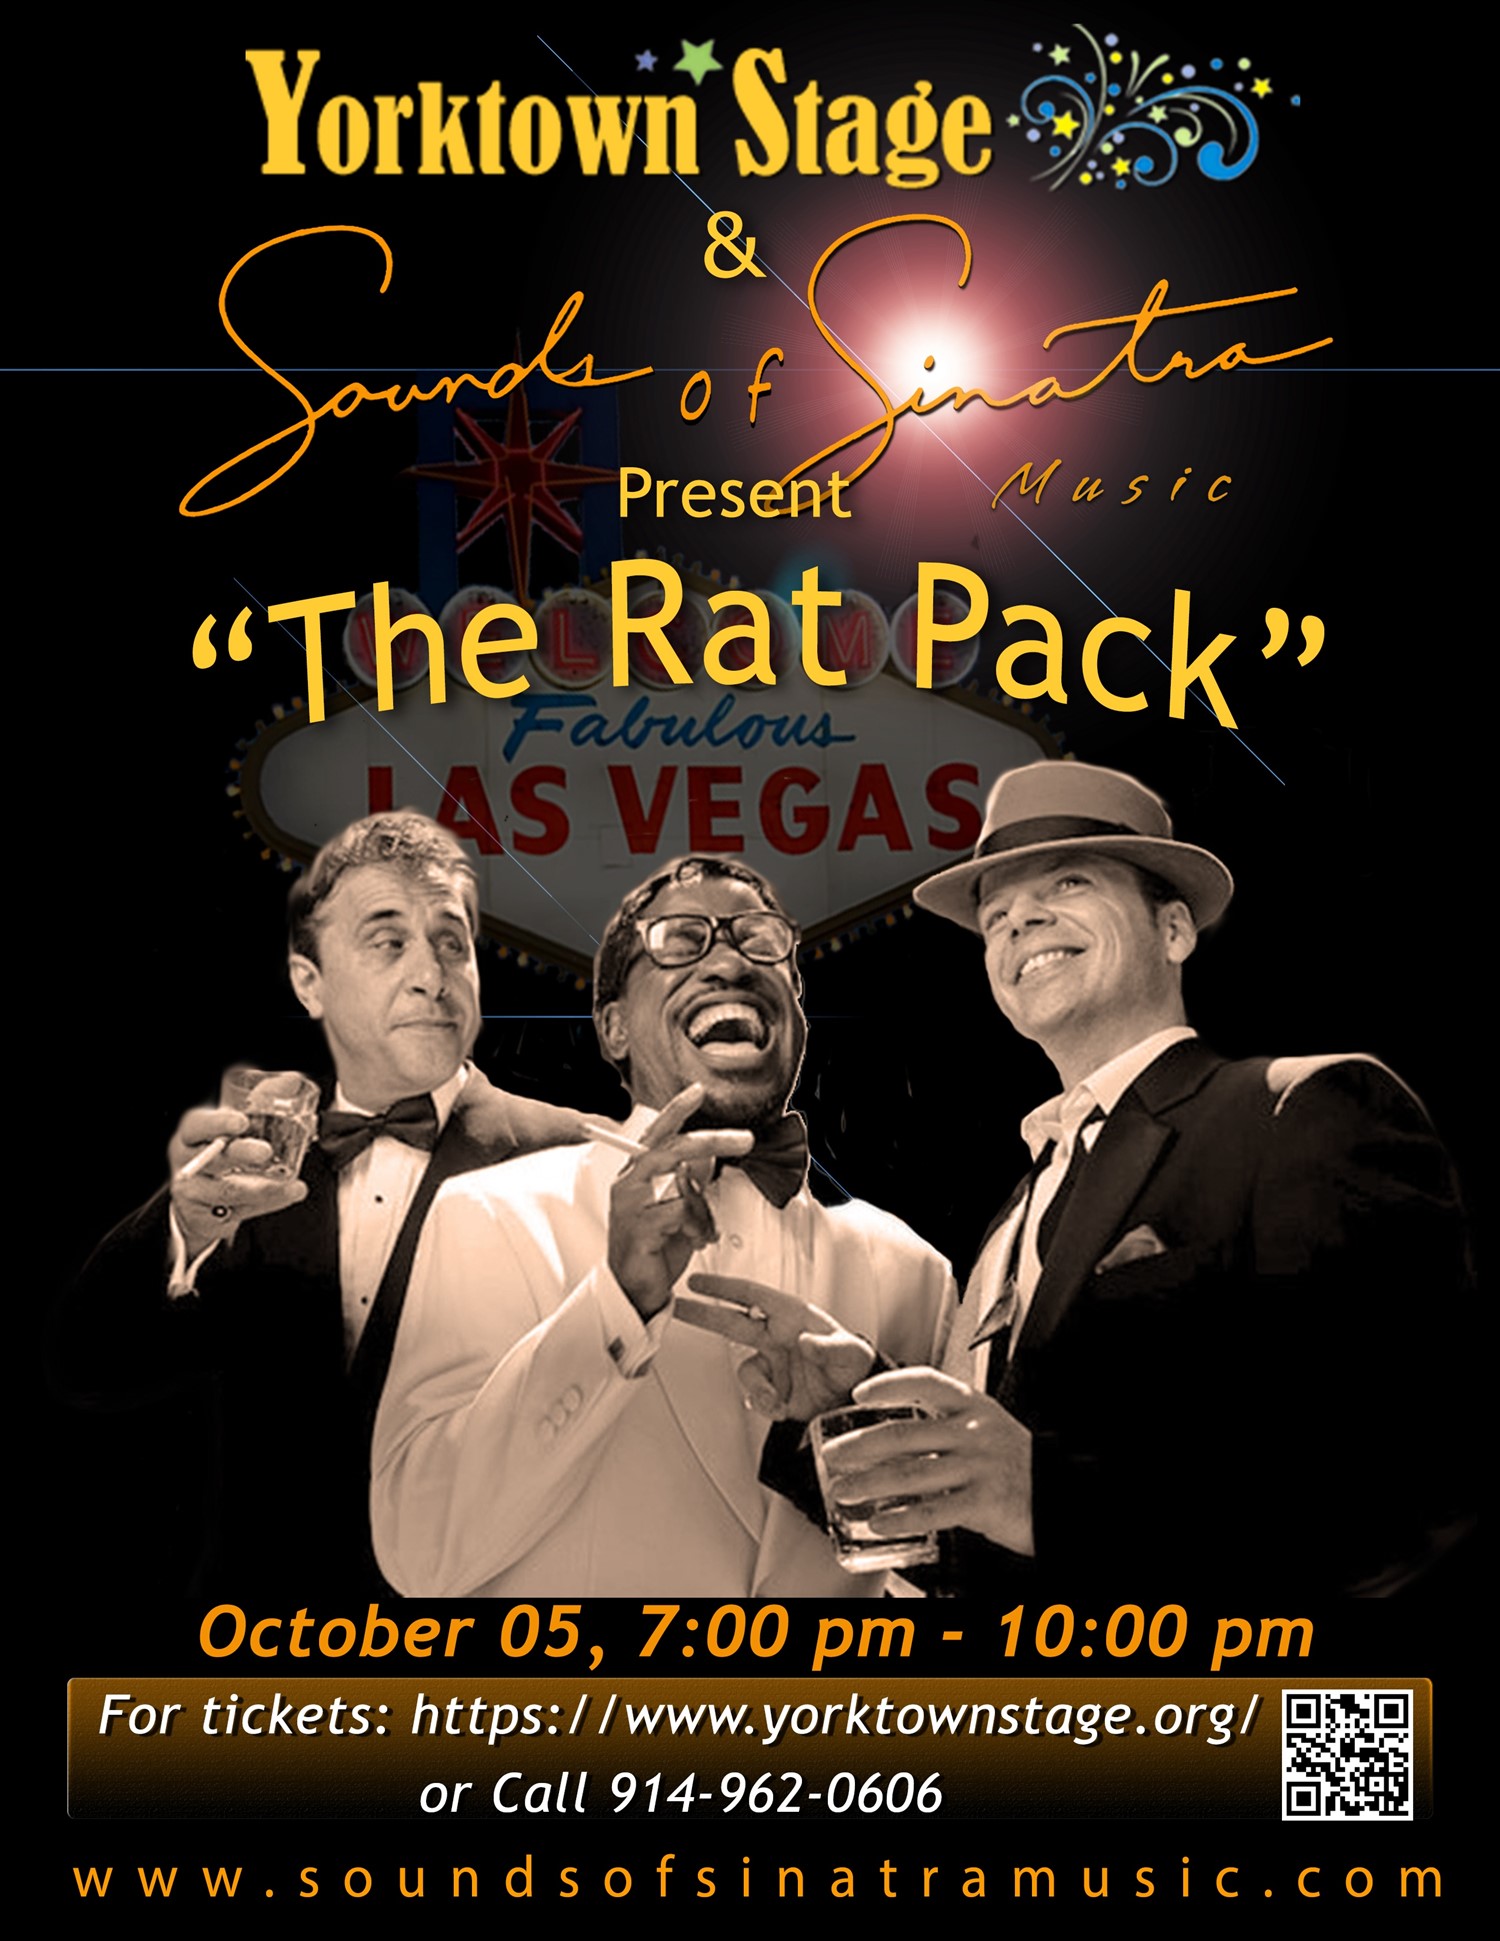 The Rat Pack Is Back Sounds of Sinatra on oct. 05, 19:00@Yorktown Stage 2023 - Elegir asientoCompra entradas y obtén información enYorktown Stage 